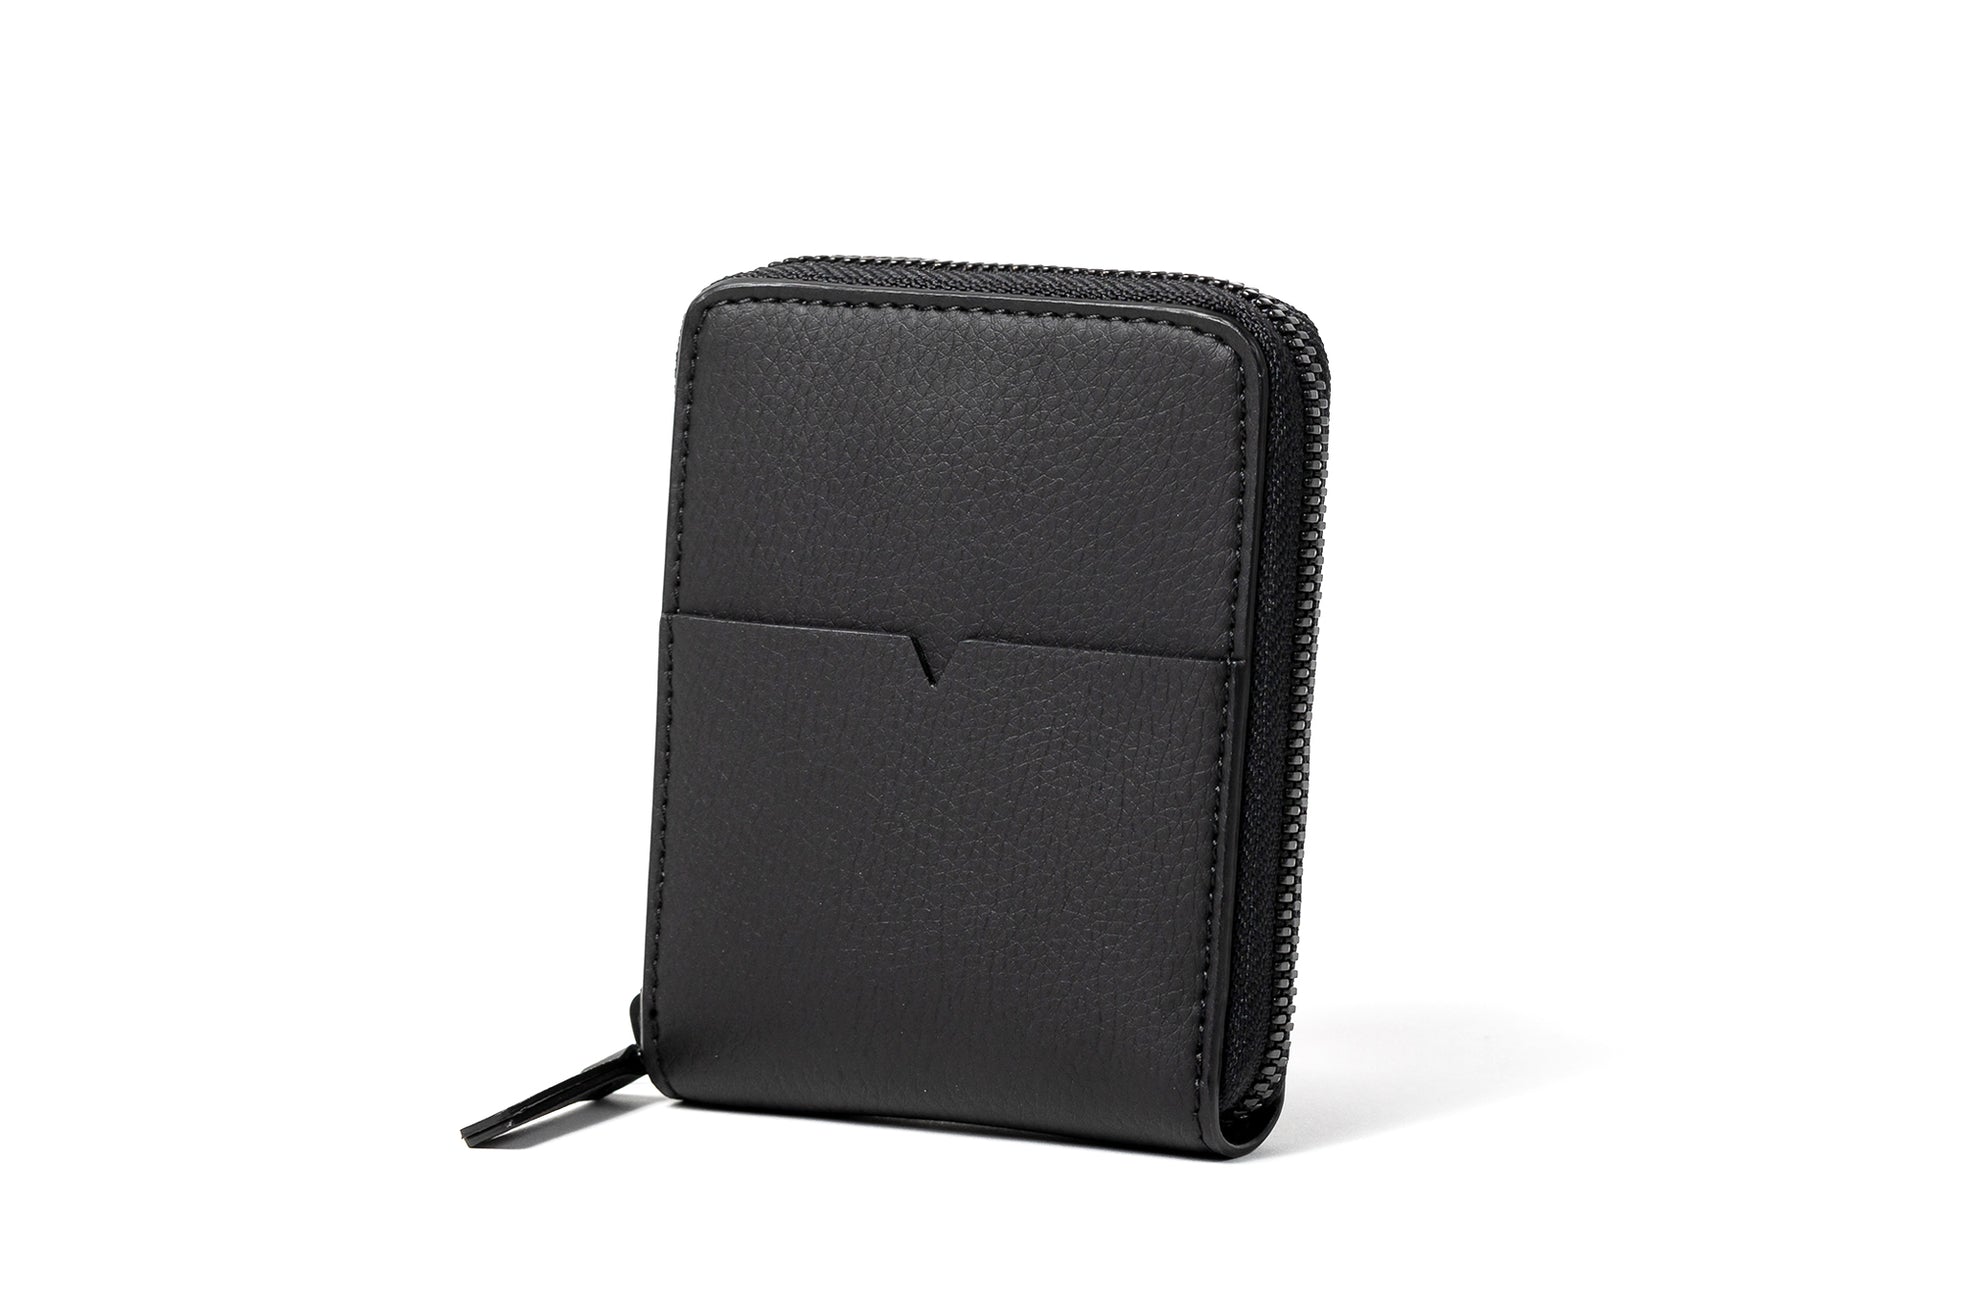 The Zip-Around Wallet - Sample Sale in Technik in Black image 5